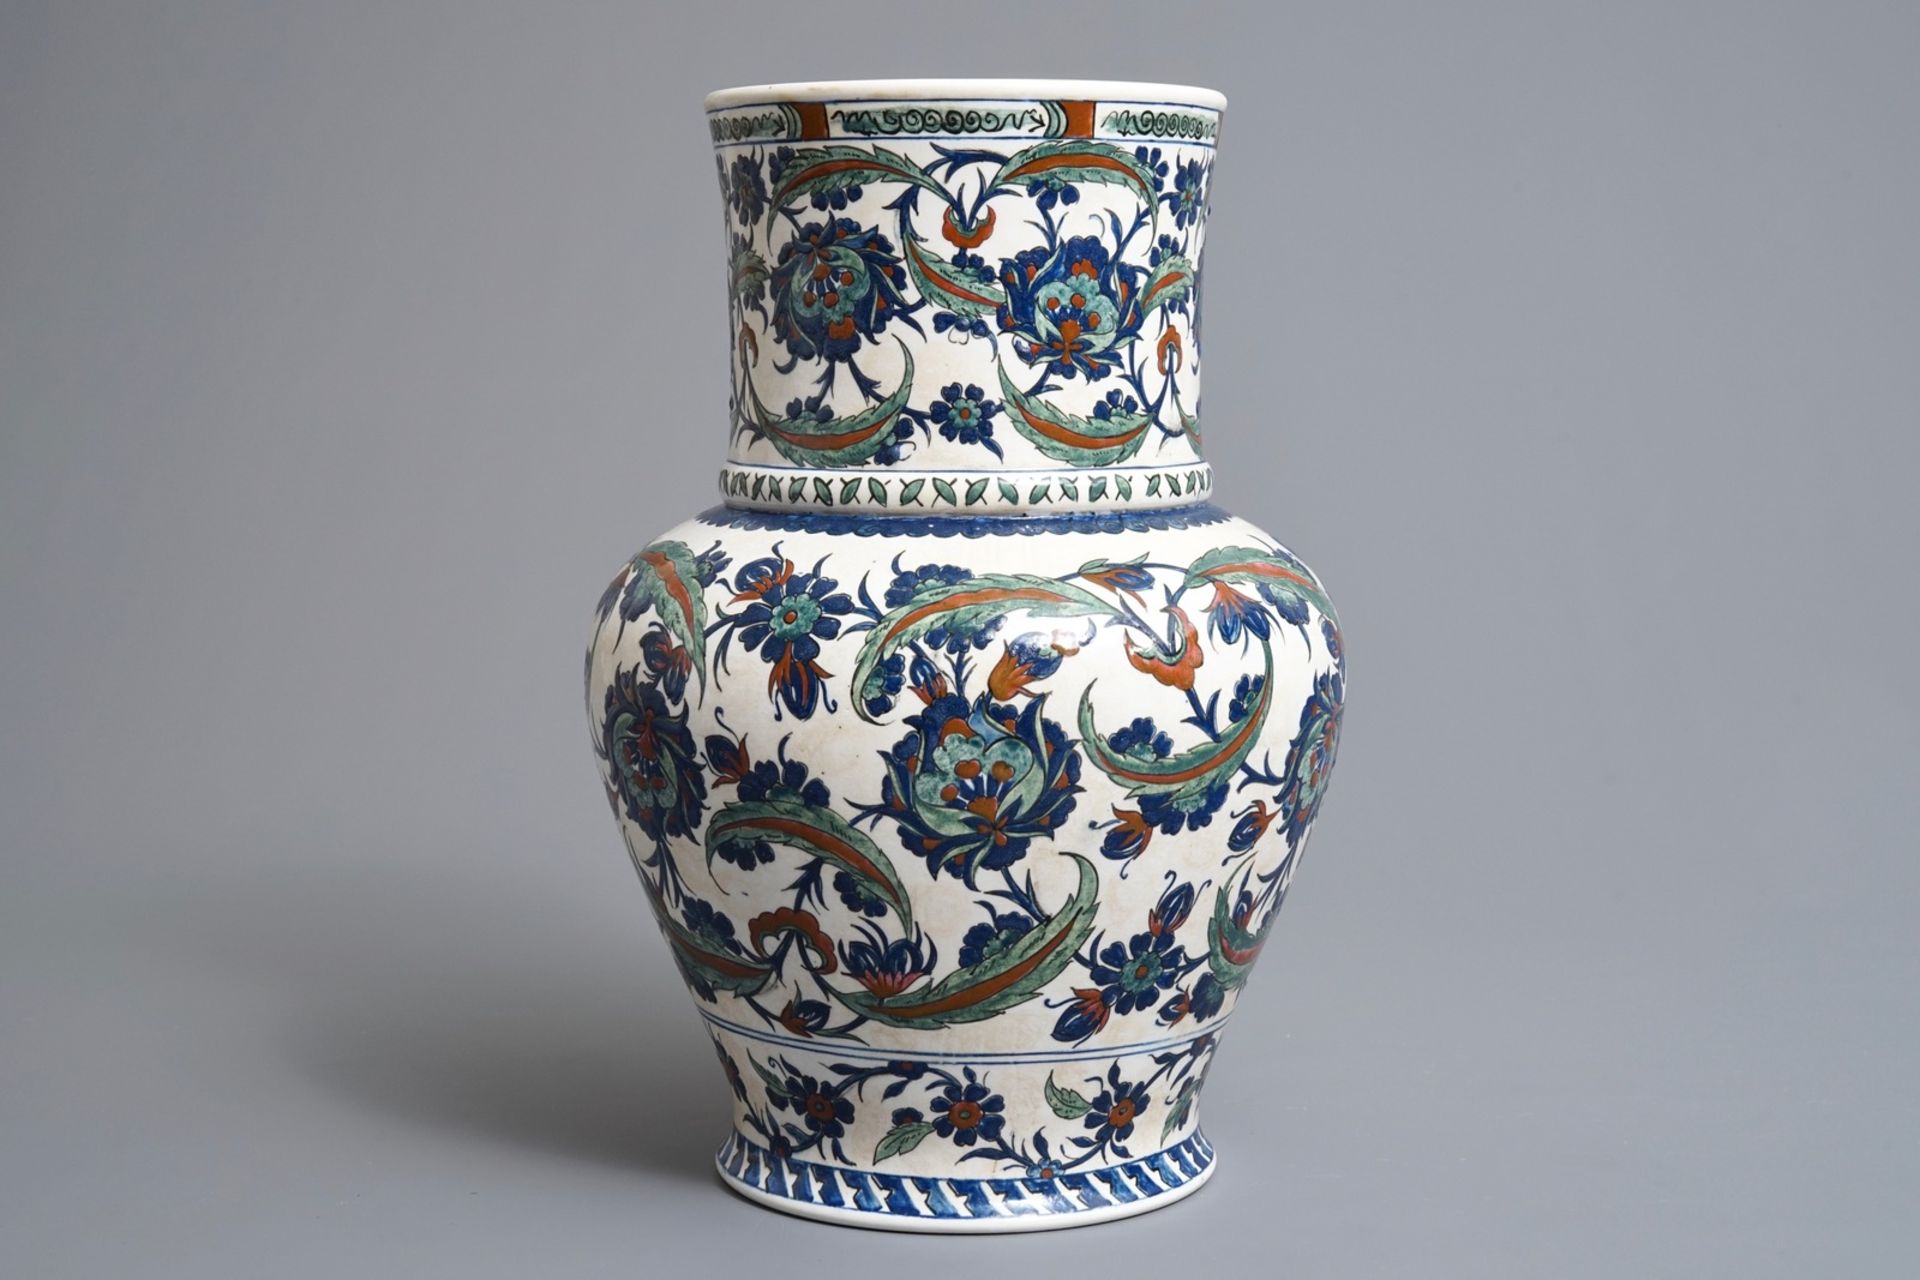 An Iznik-style vase with floral design, Samson, Paris, 19e eeuw - Image 2 of 6